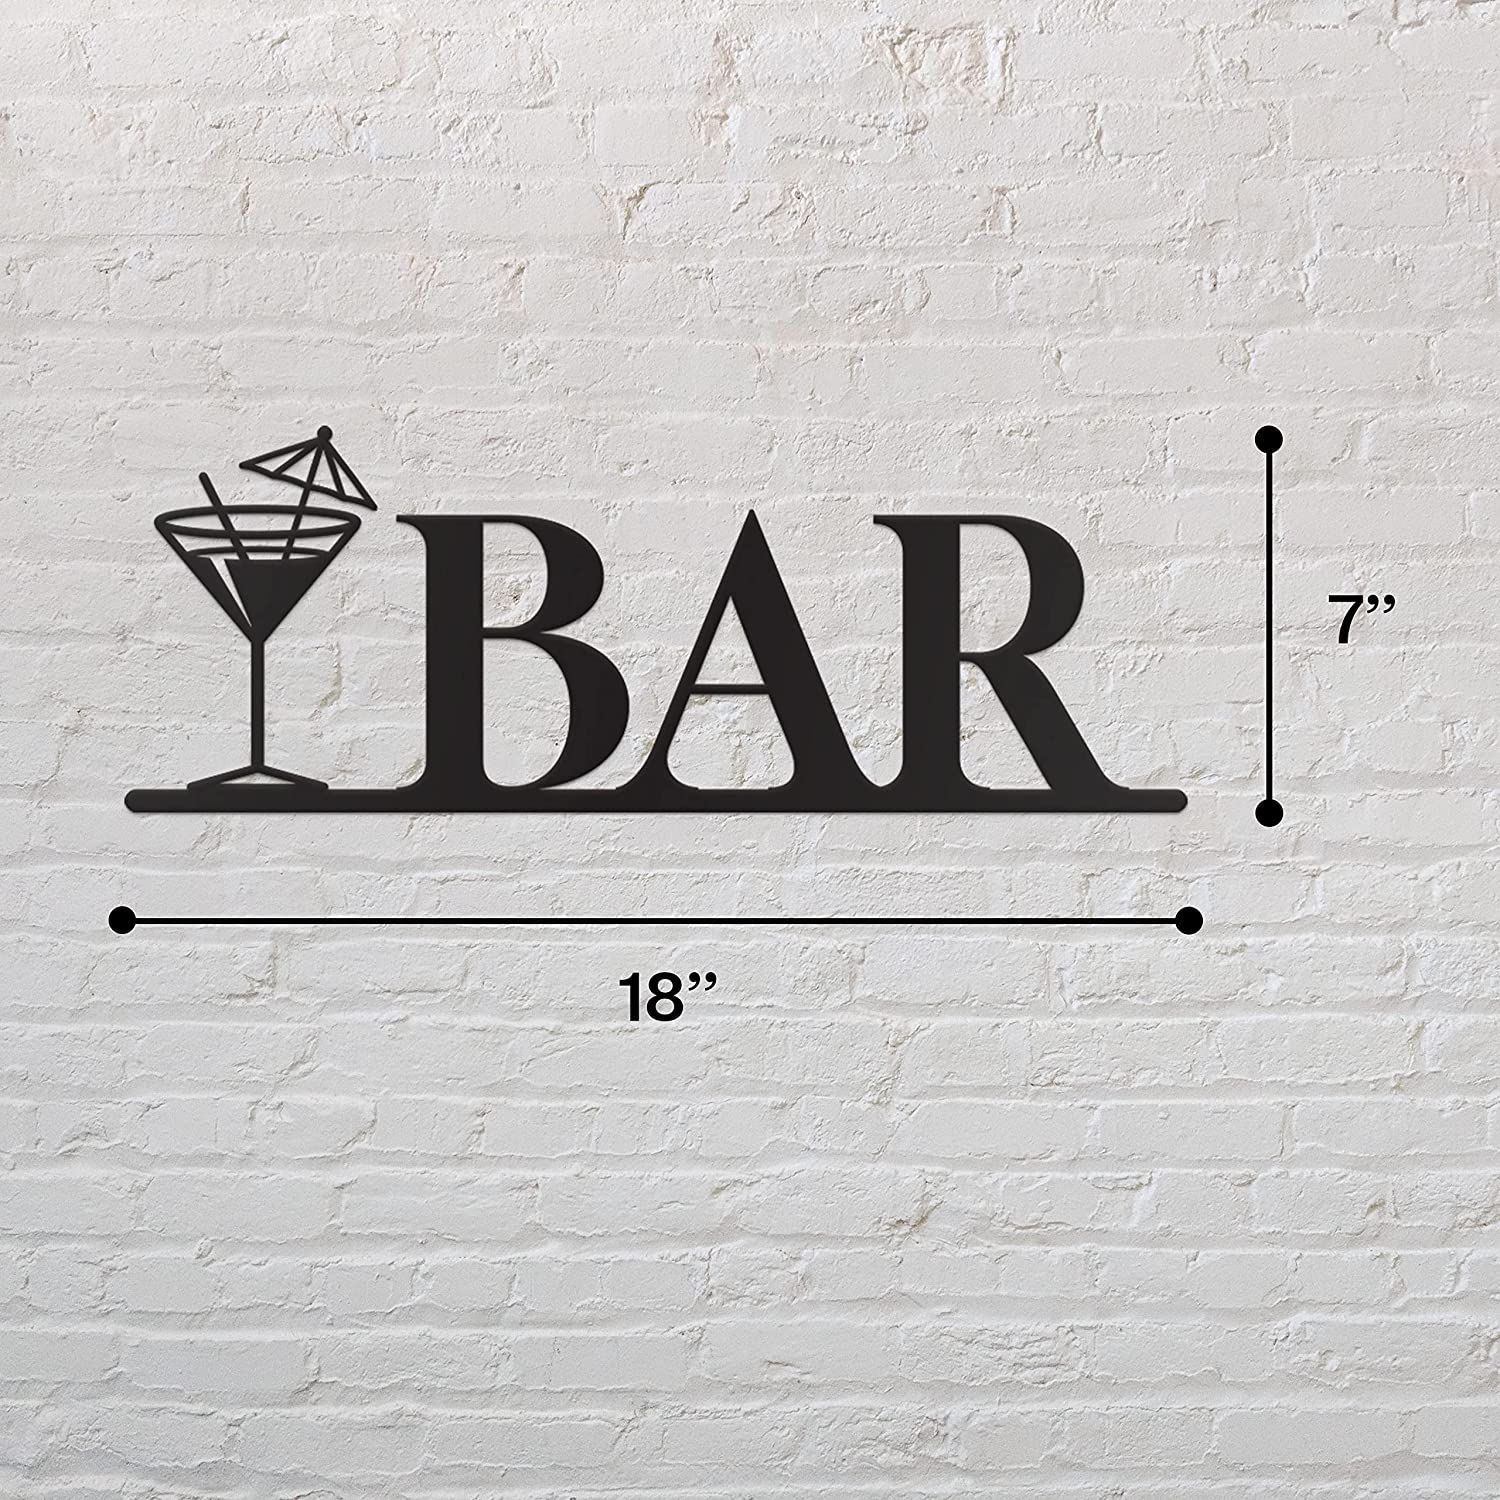 Home Bar Signs Metal Bar Wall Decor - 18"x7" Black Bar Letters Modern Fashion Bar Decorations For The Home Bar Set Bar Decor For Home Bar Decor